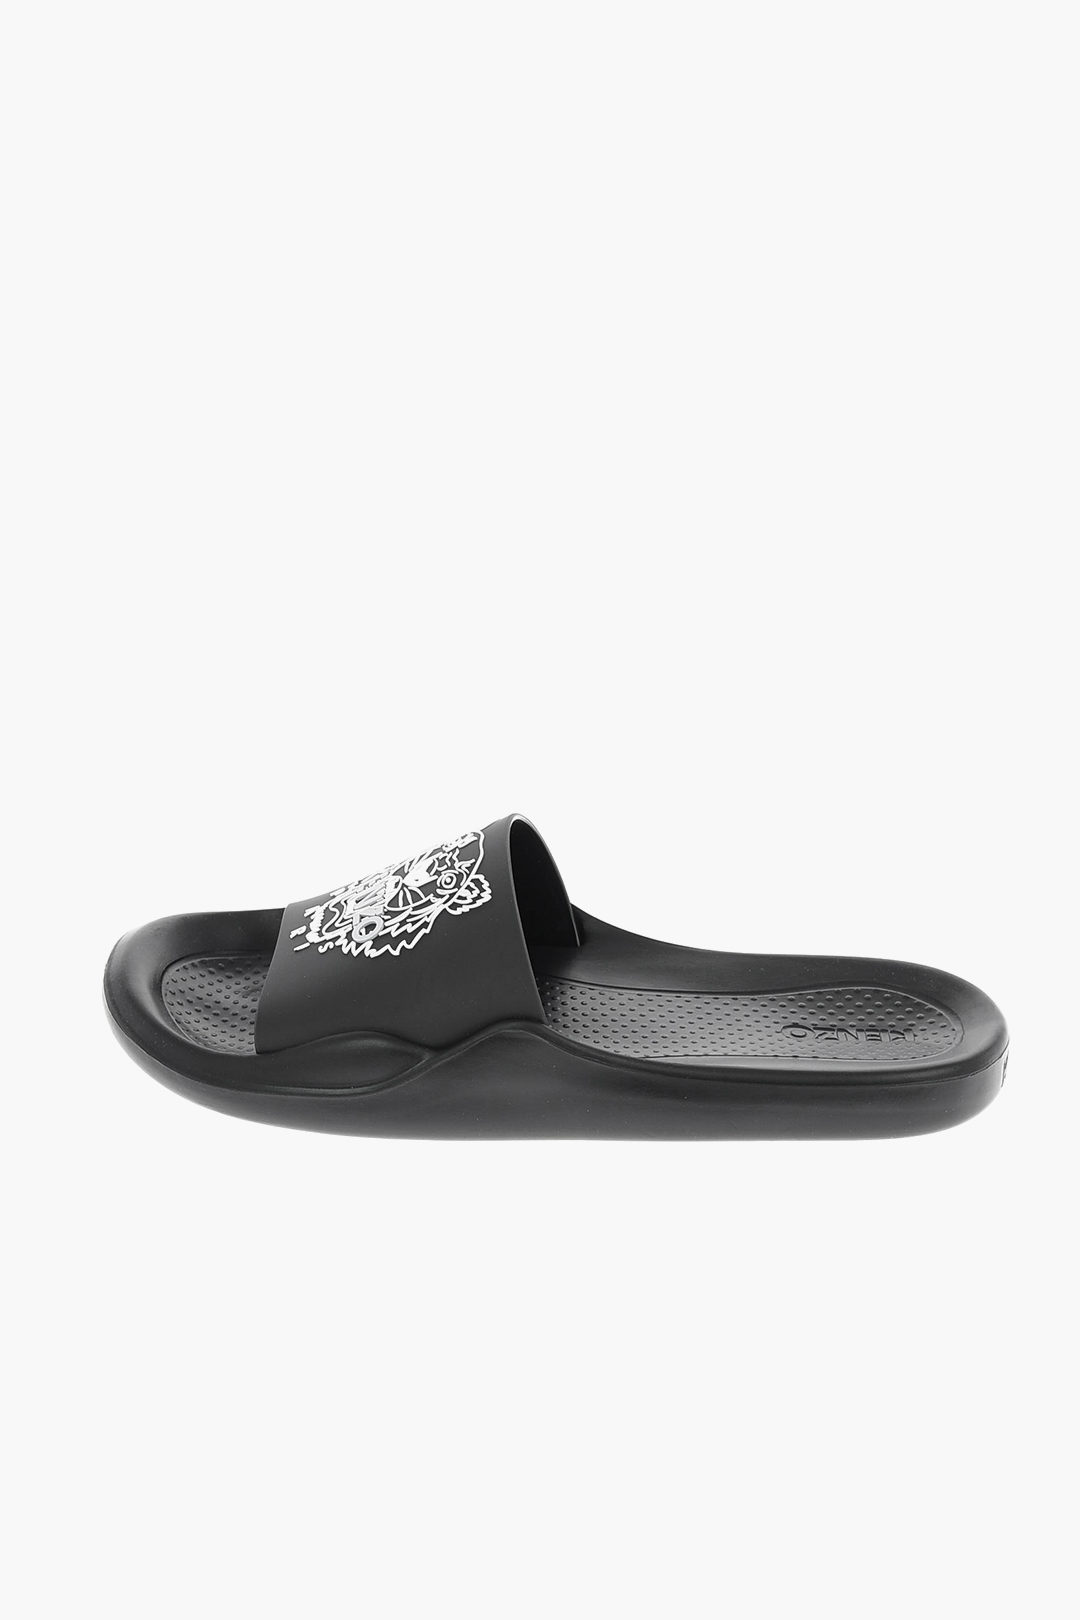 rubber slippers women - Glamood